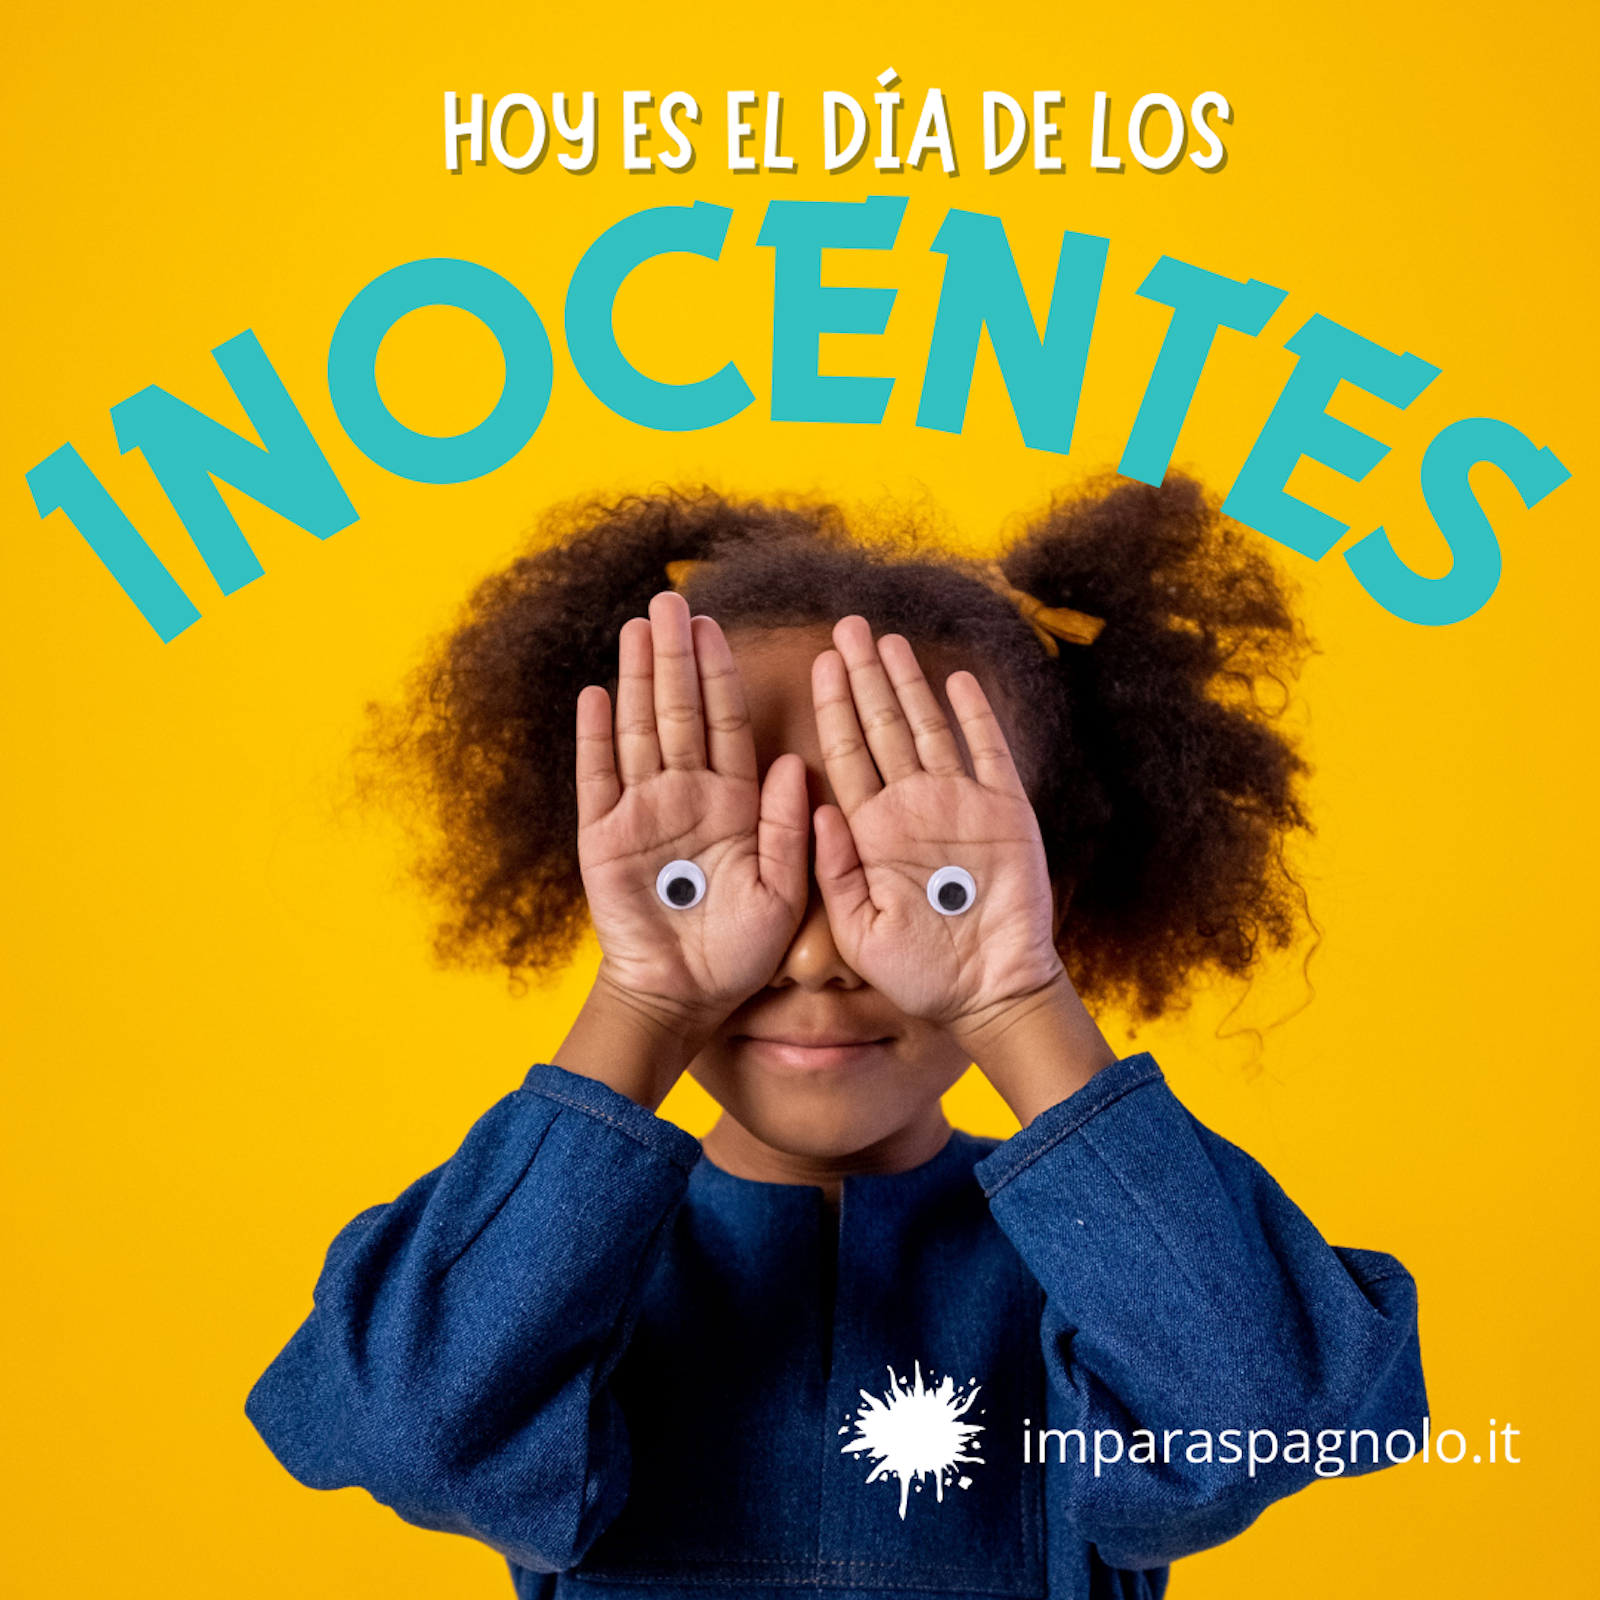 Cultura spagnola e latinoamericana: Oggi è il "día de los inocentes"